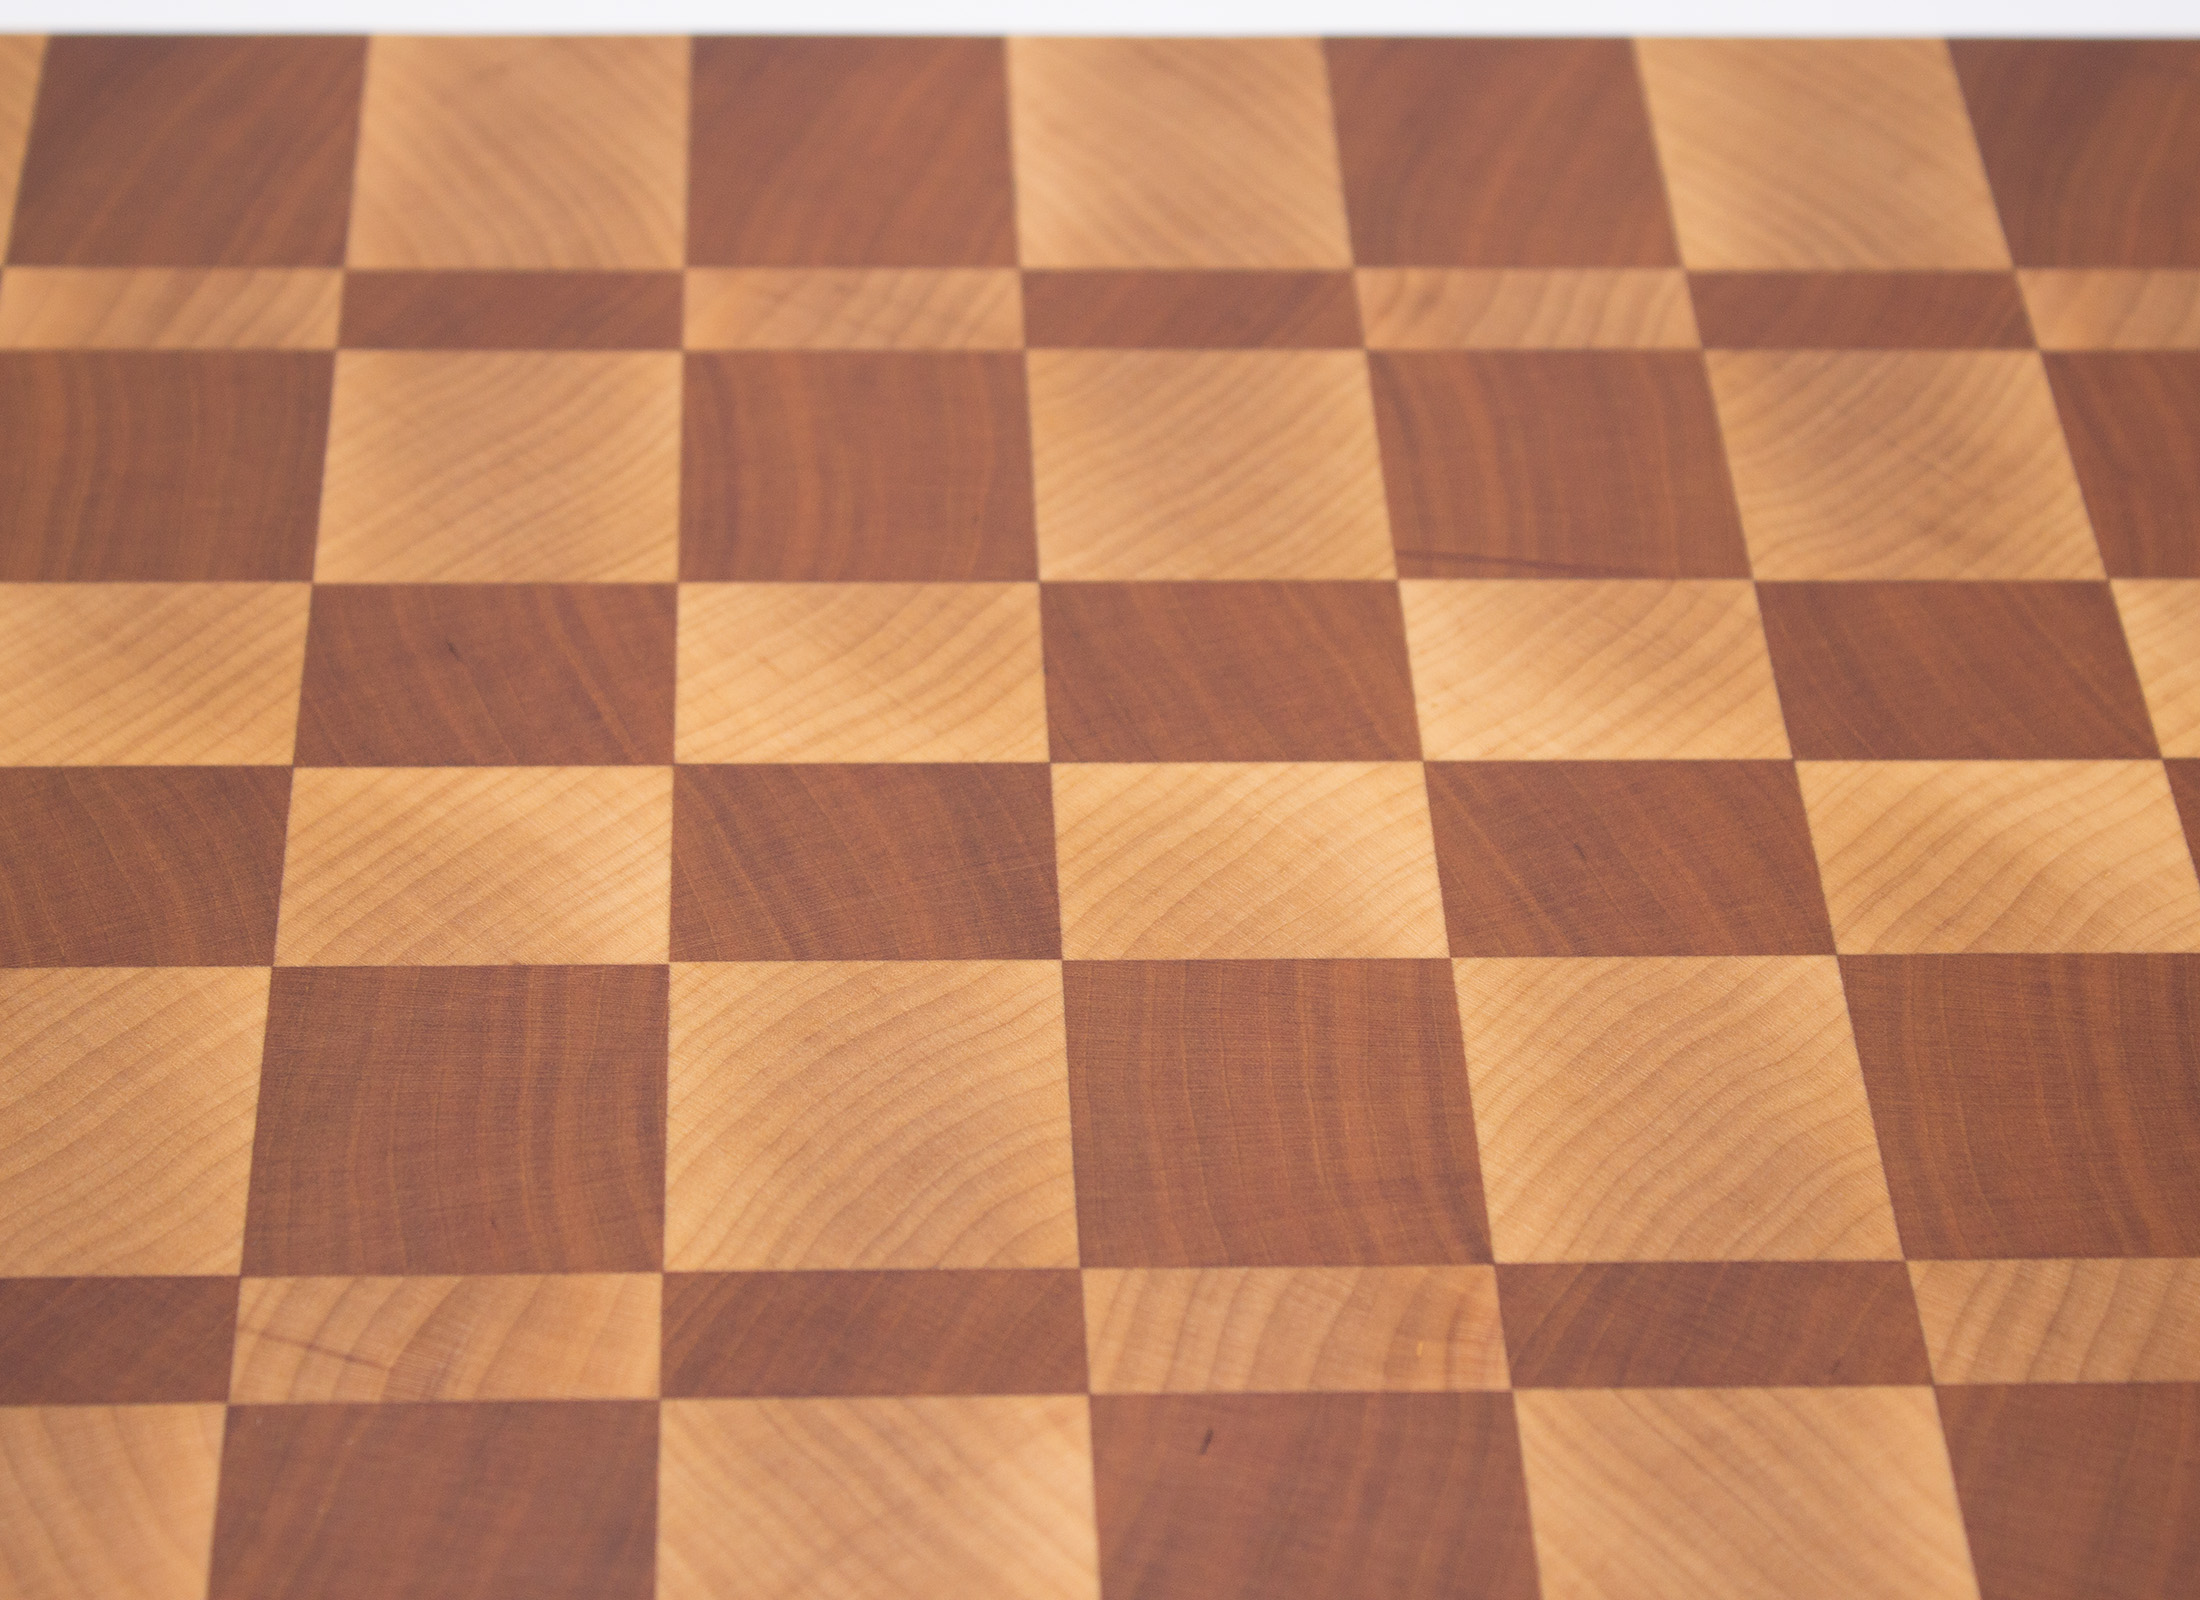 https://www.rockfordwoodcrafts.com/wp-content/uploads/Maple-and-Cherry-Checkerboard-End-Grain-Cutting-Board-Closeup.jpg